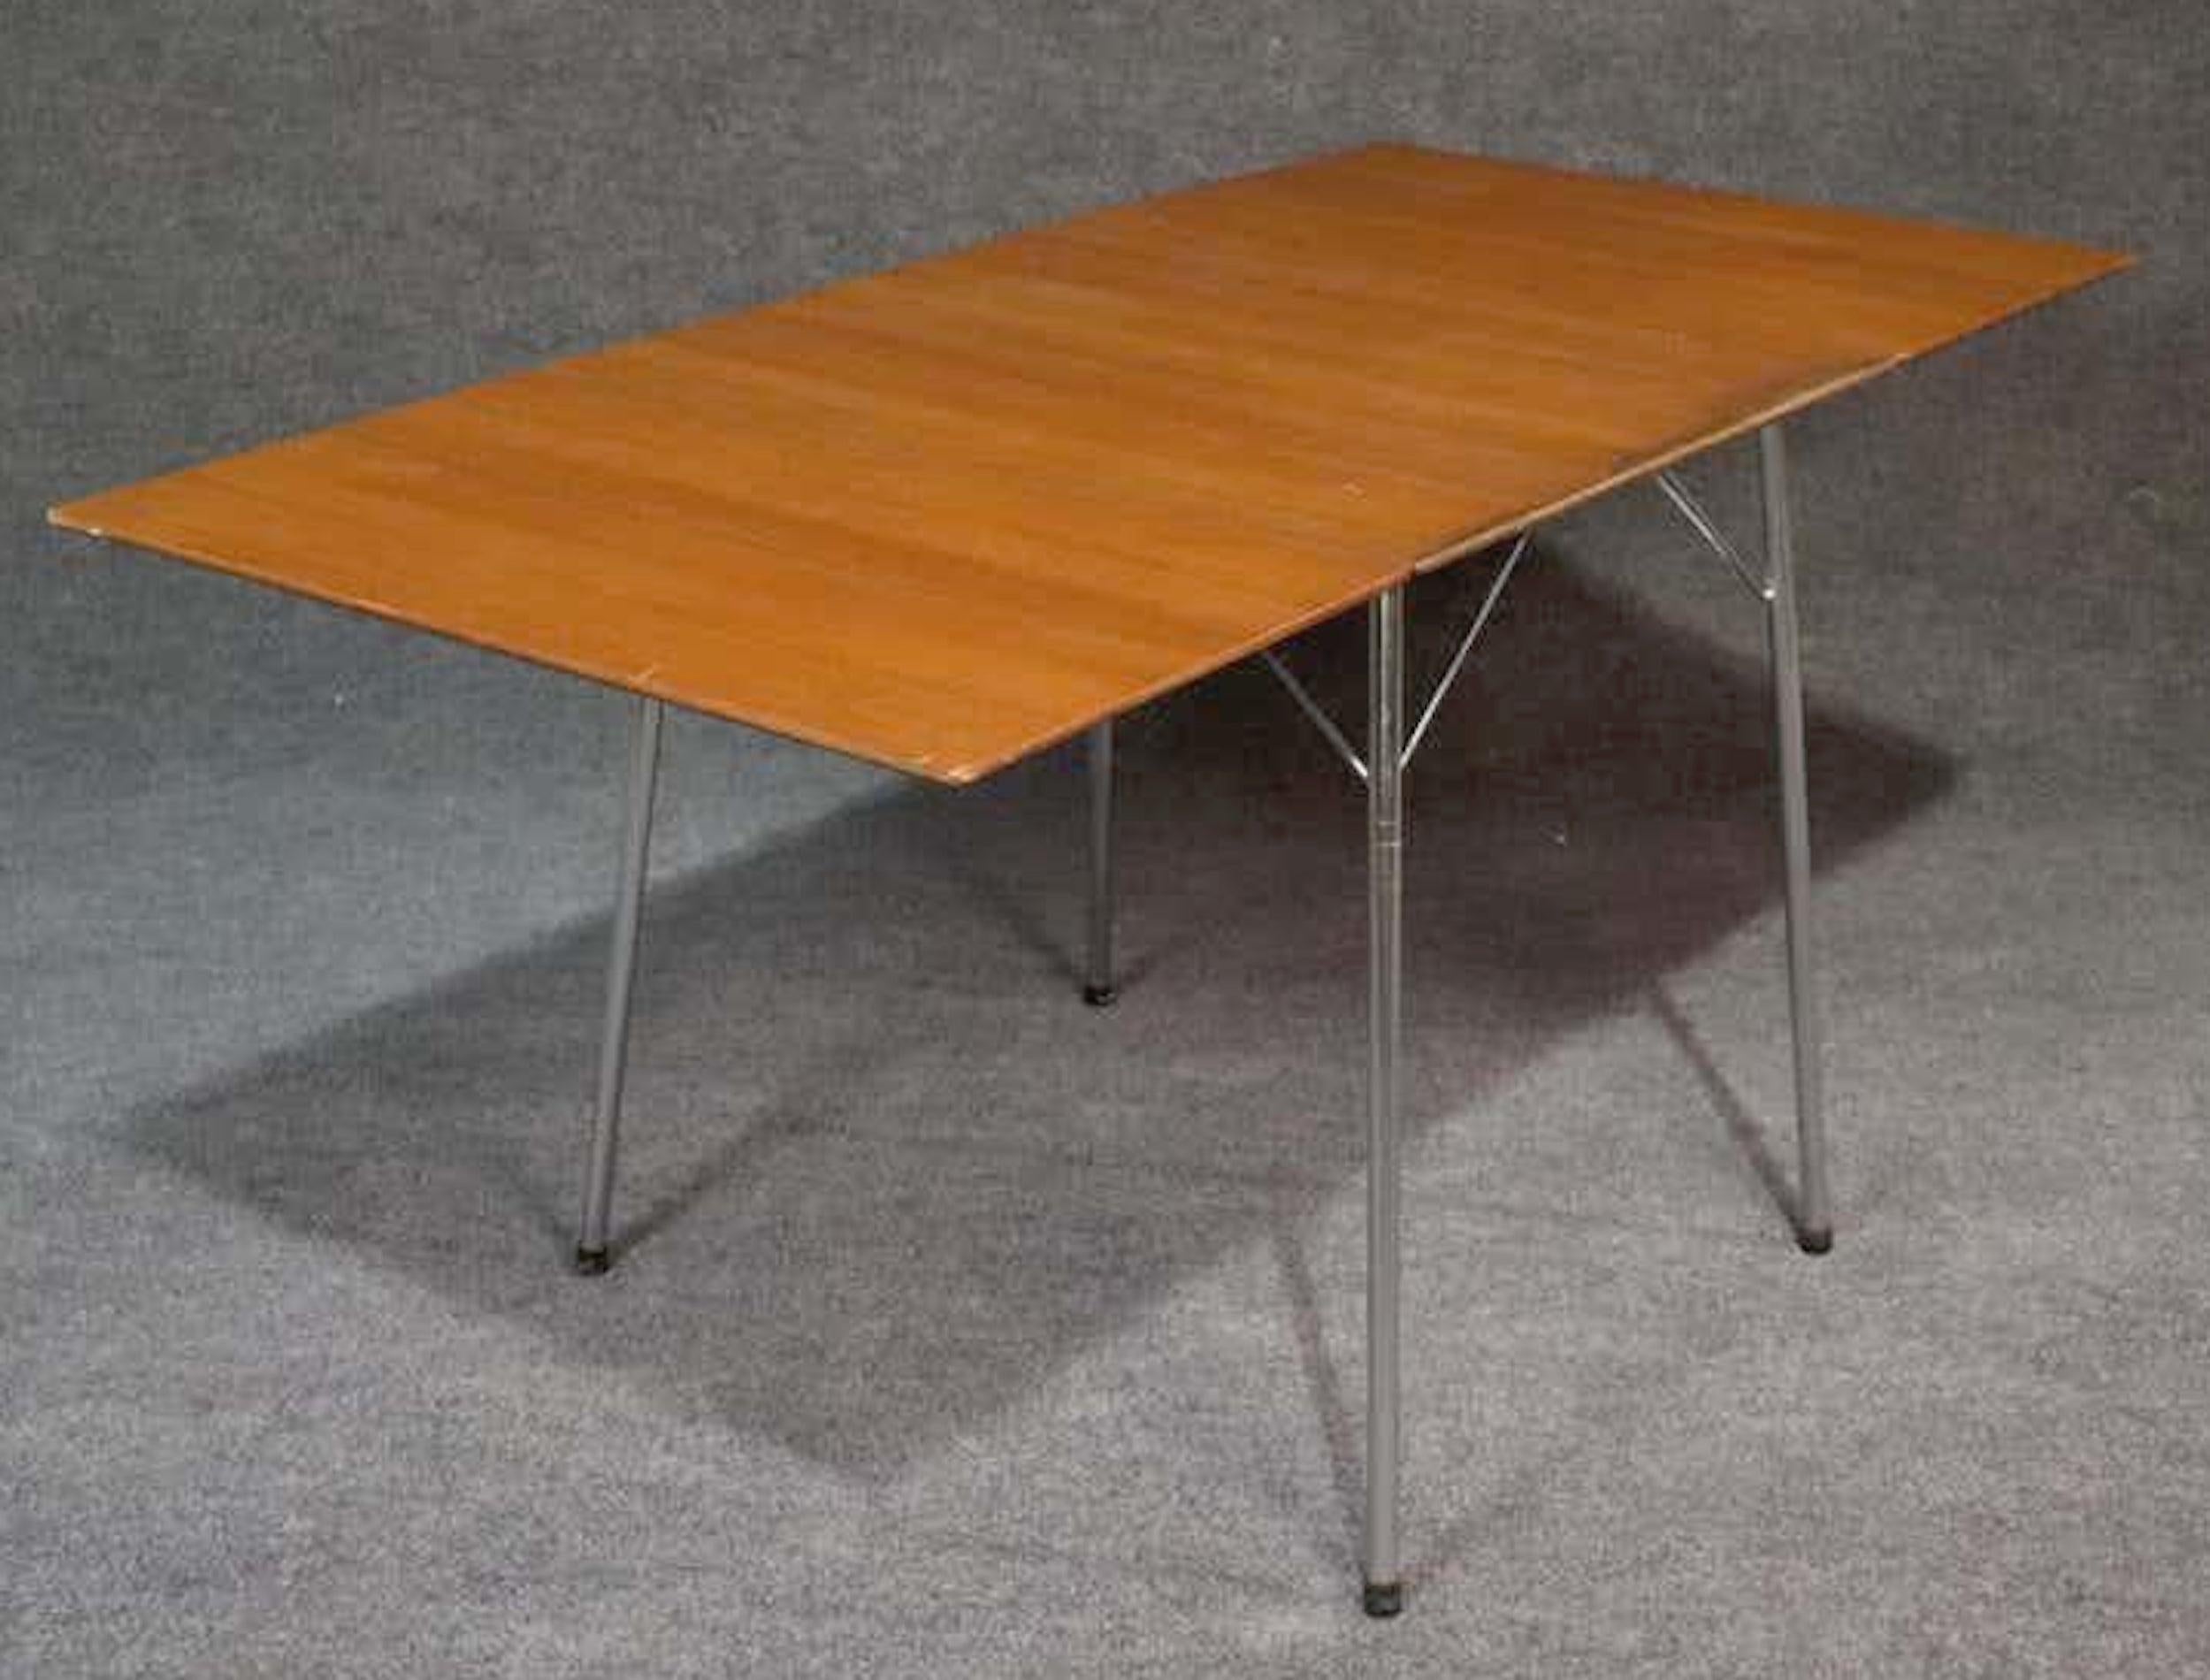 Midcentury Danish modern drop leaf table in teak wood grain. Made for Fritz Hansen furniture company.
Measures: 18